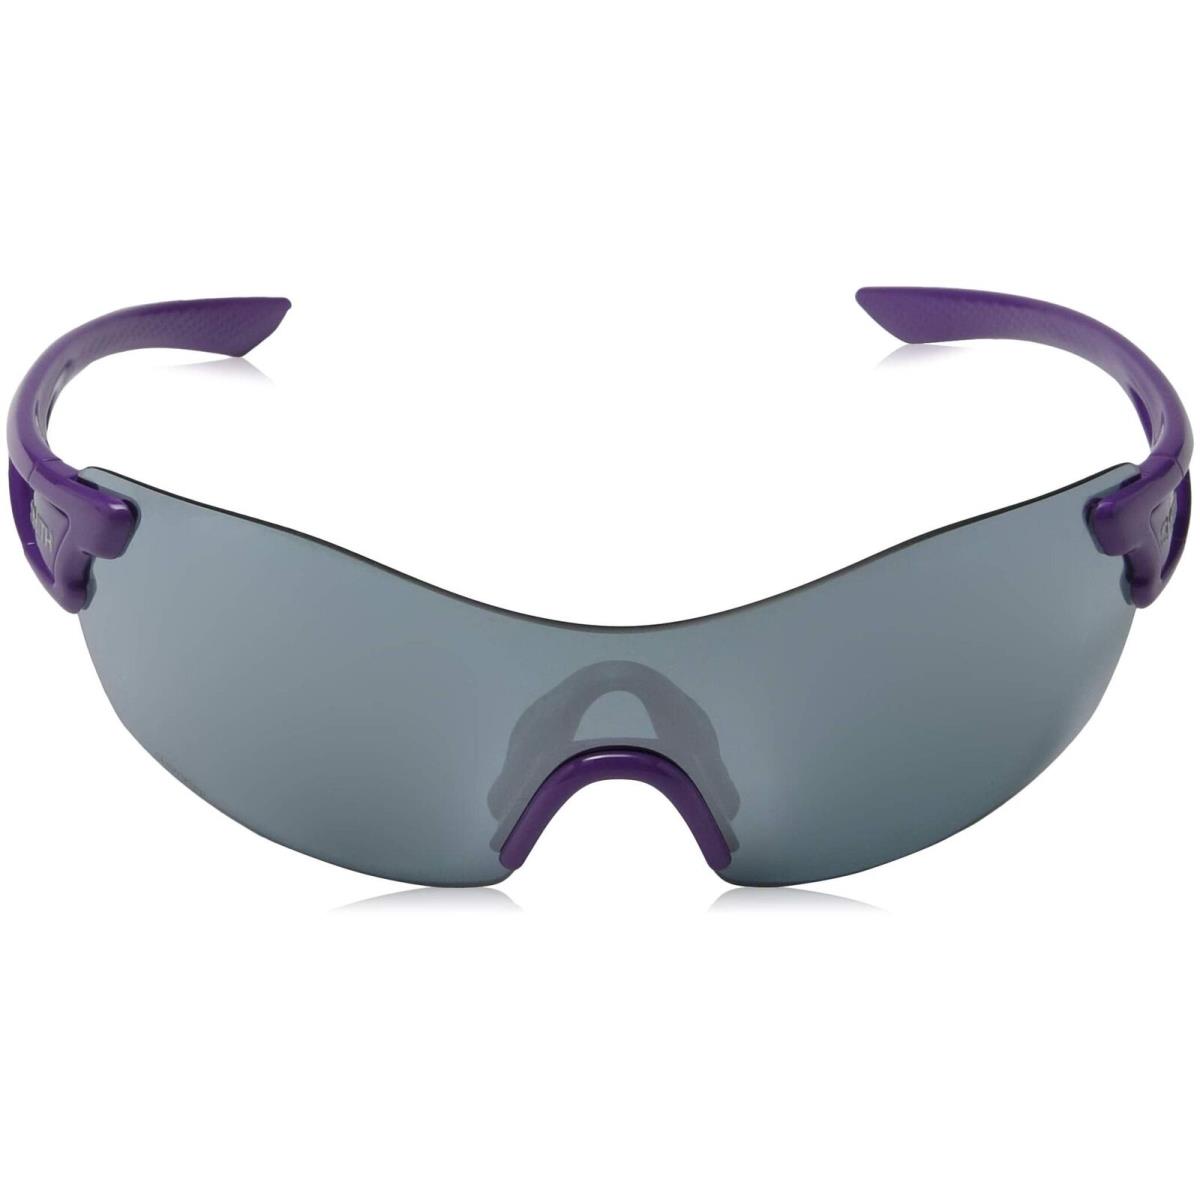 PLSLXB3TFR-ASANA Mens Smith Optics Pivlock Asana Sunglasses - Frame: Shiny Violet